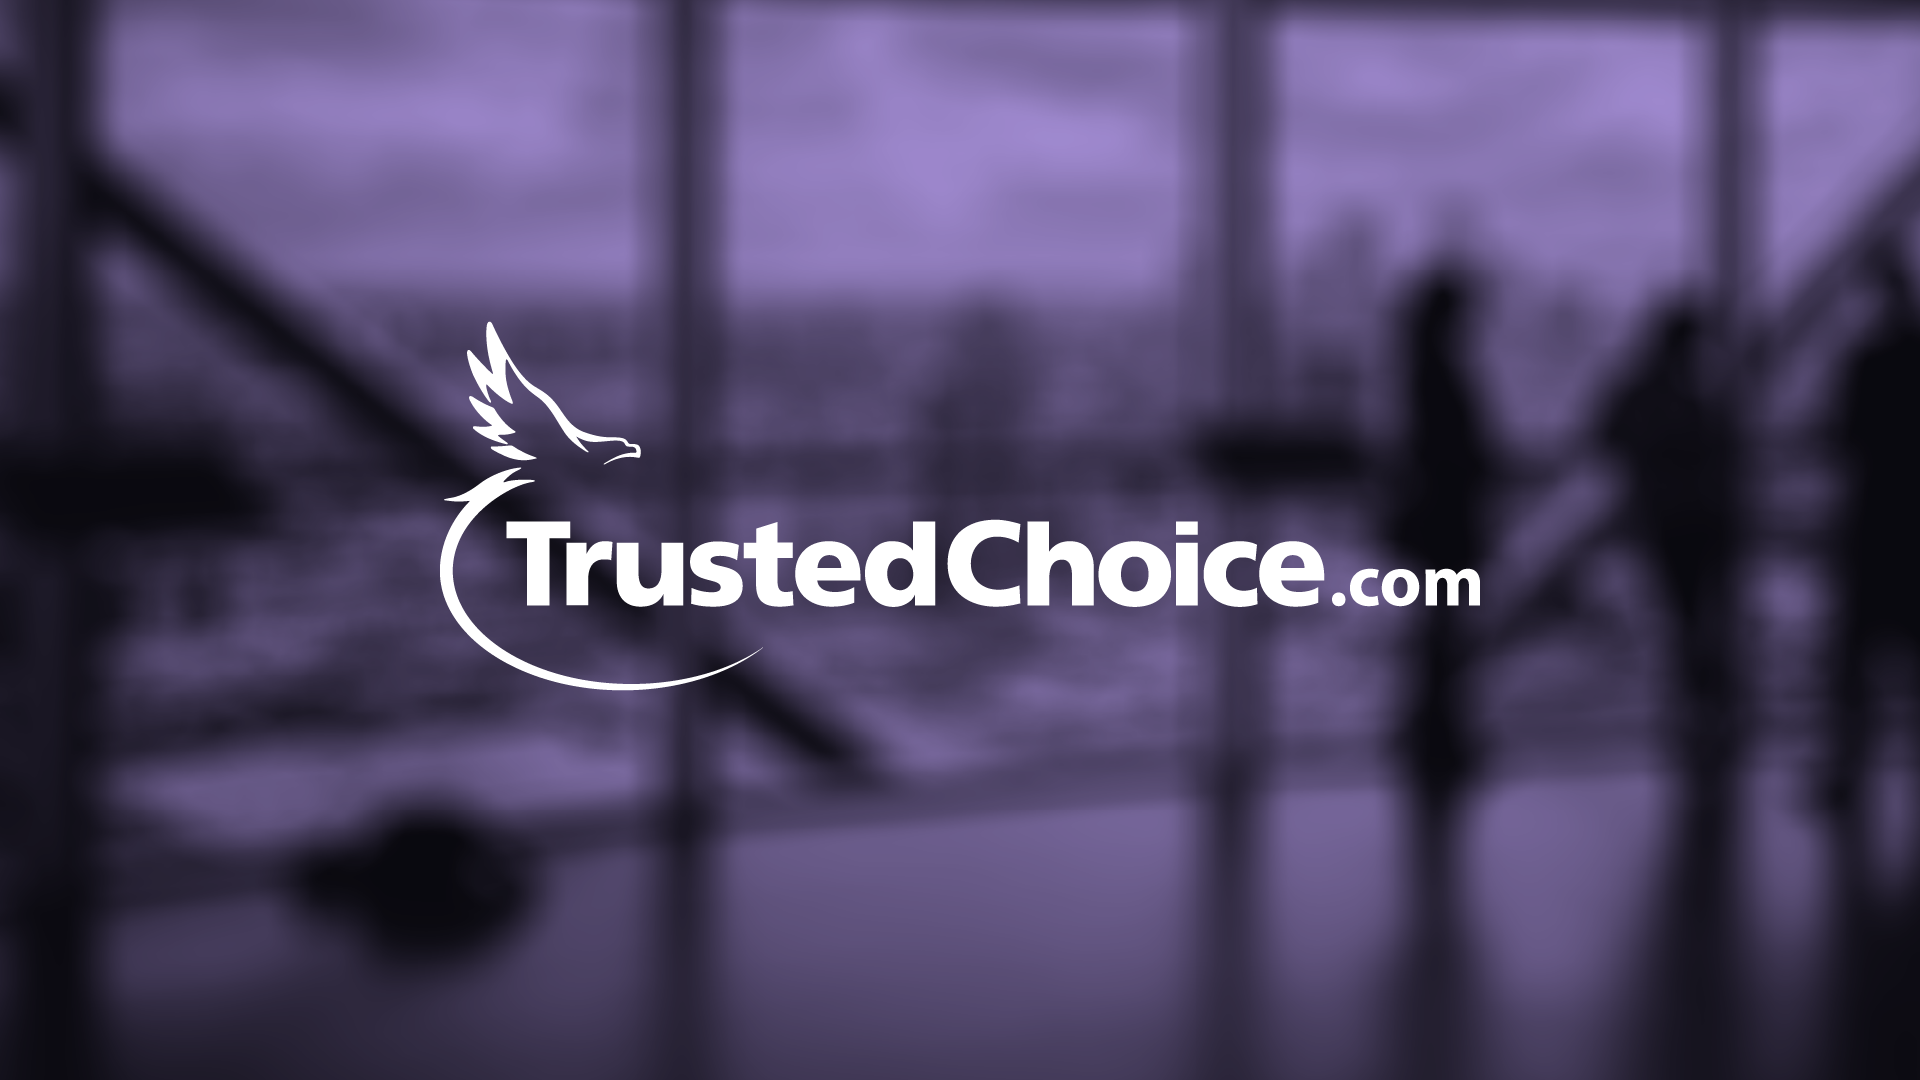 TrustedChoice.com